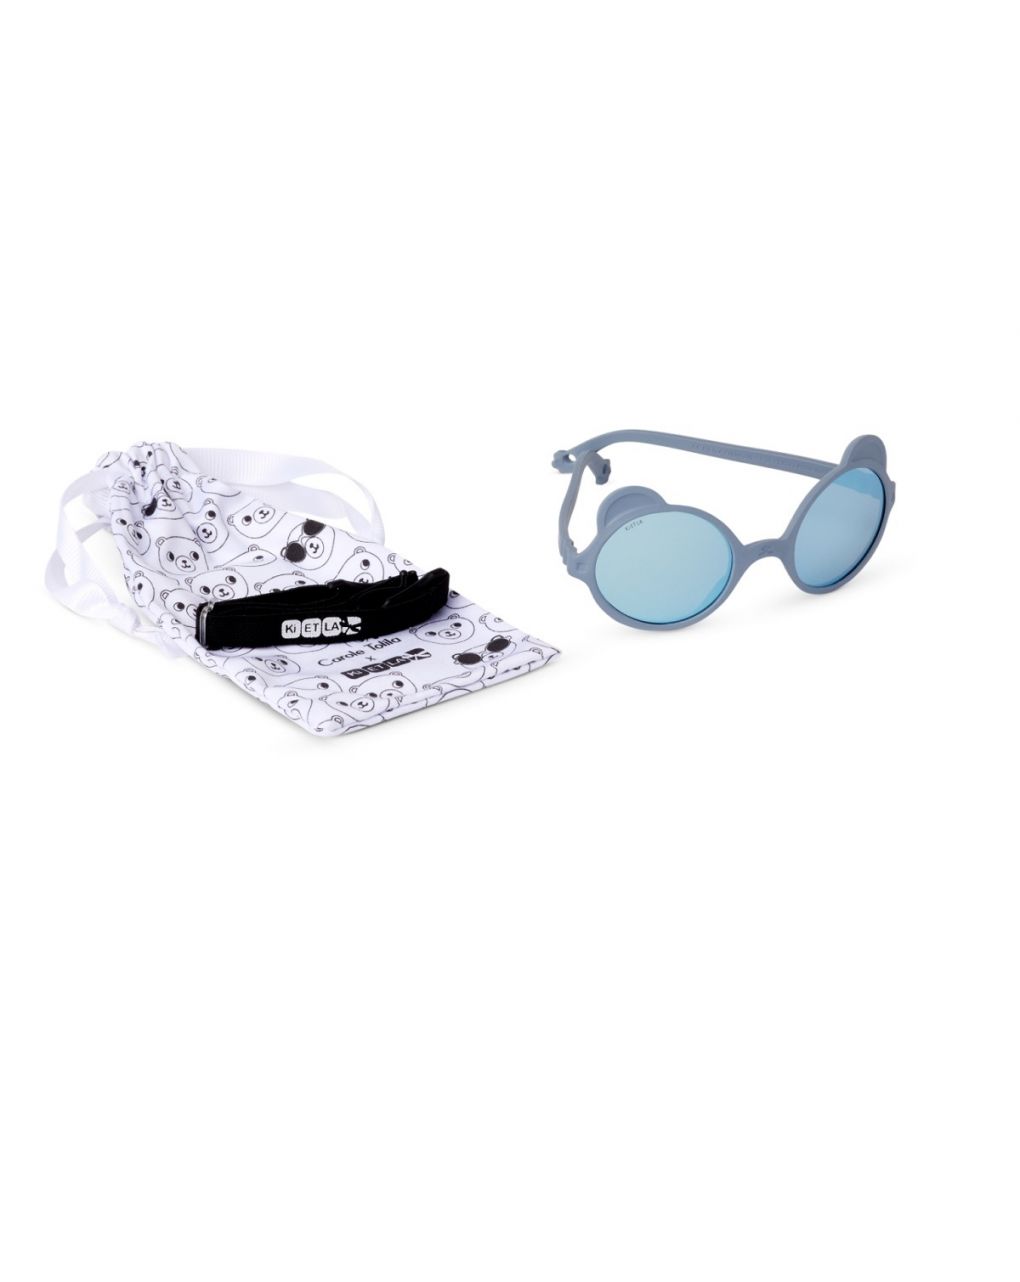 Kietla γυαλιά ηλίου ours'on 1-2 ετών silver blue - kietla